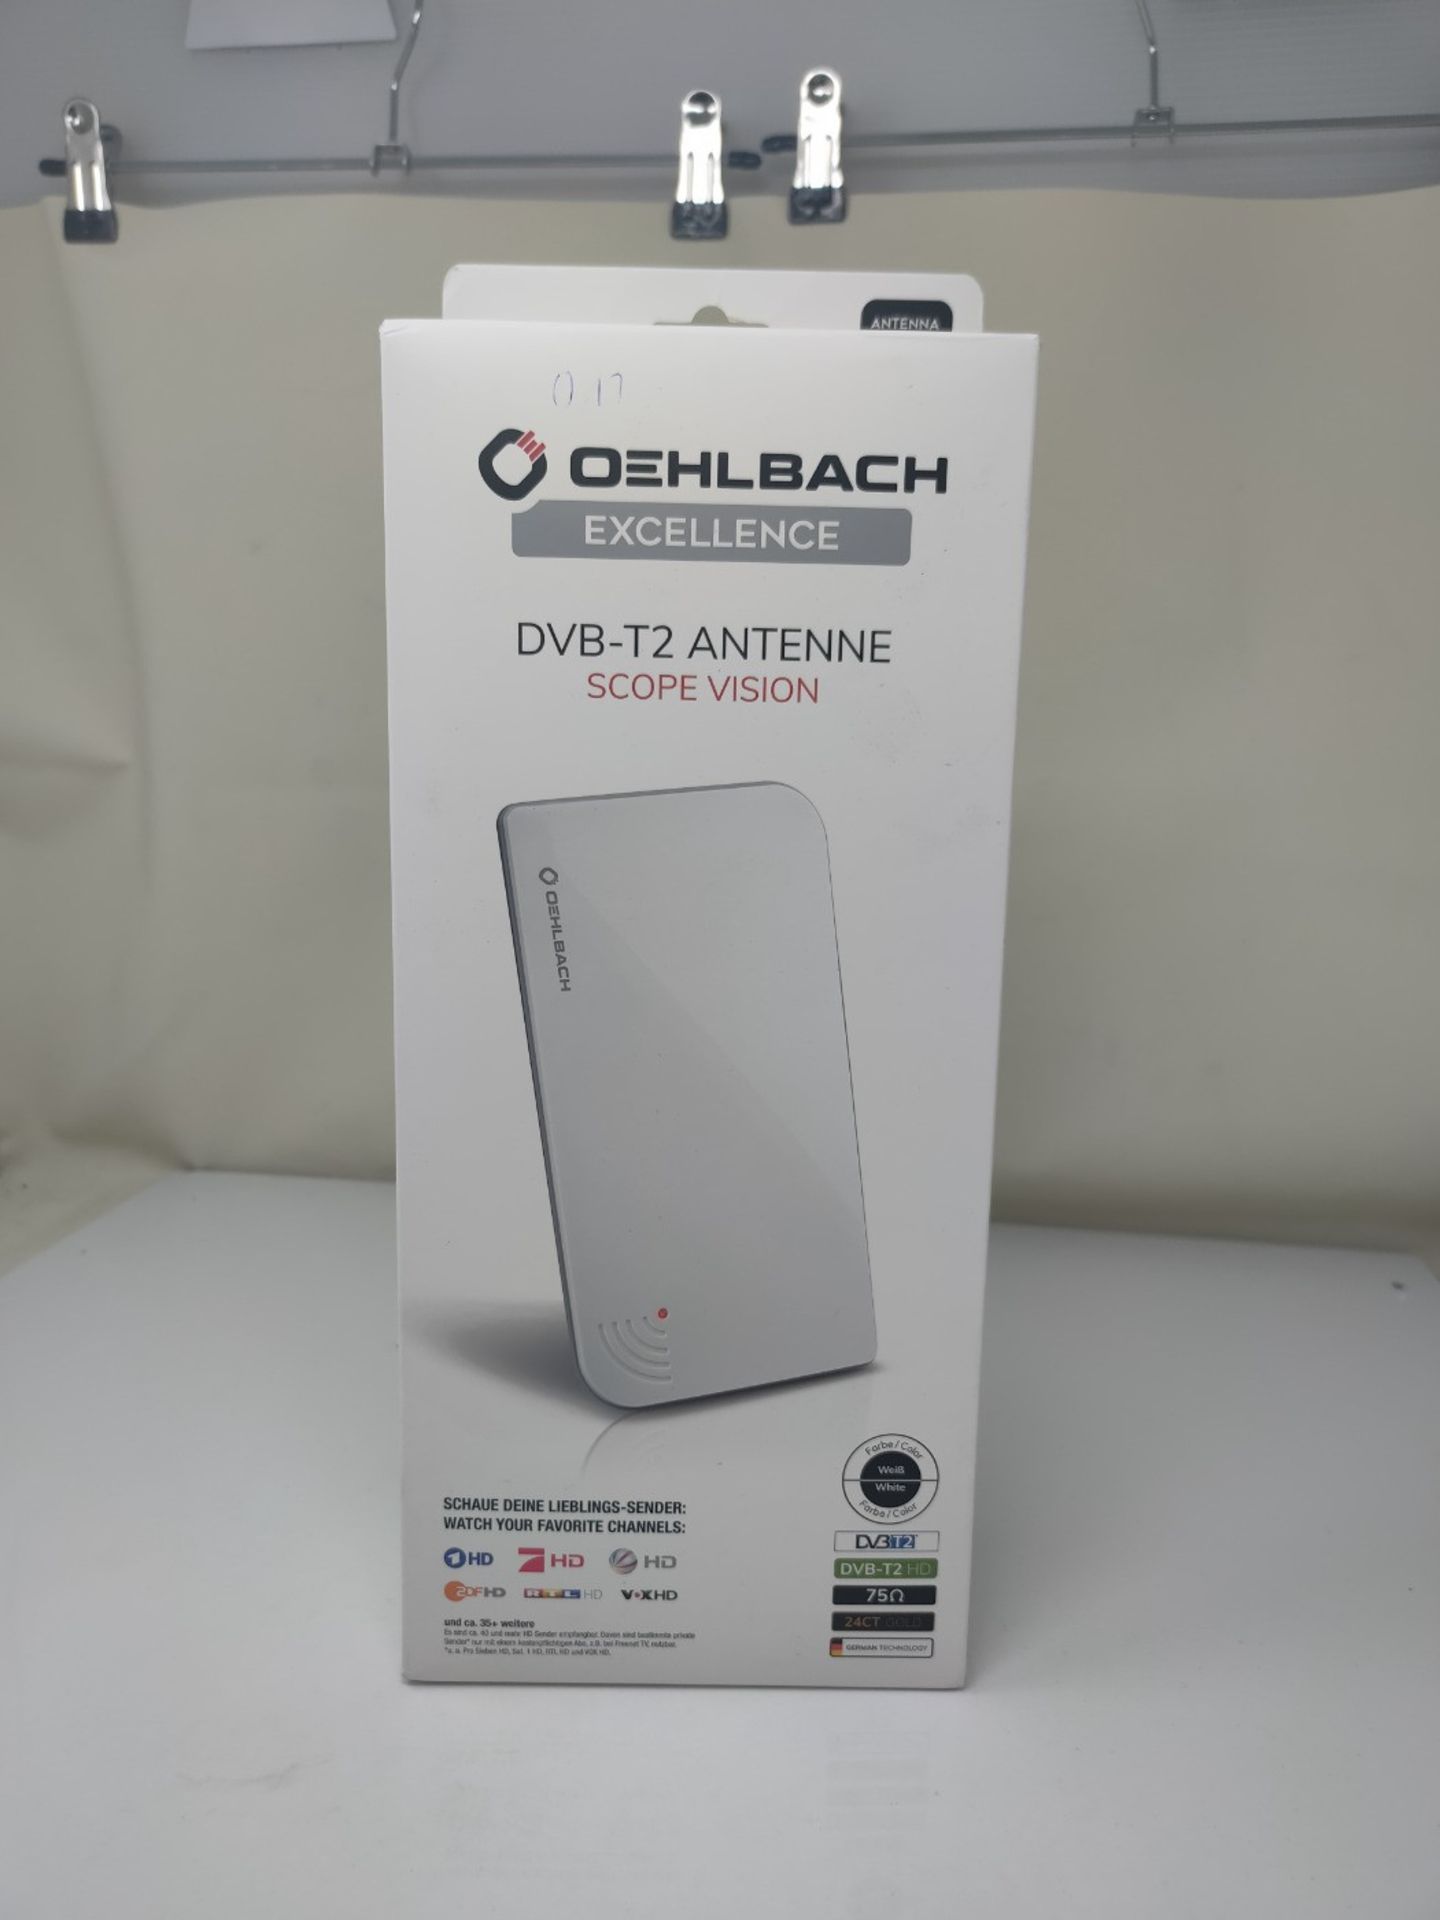 Oehlbach Scope Vision DVB-T2 HD antenna - digital indoor antenna - USB power - active - Image 2 of 3